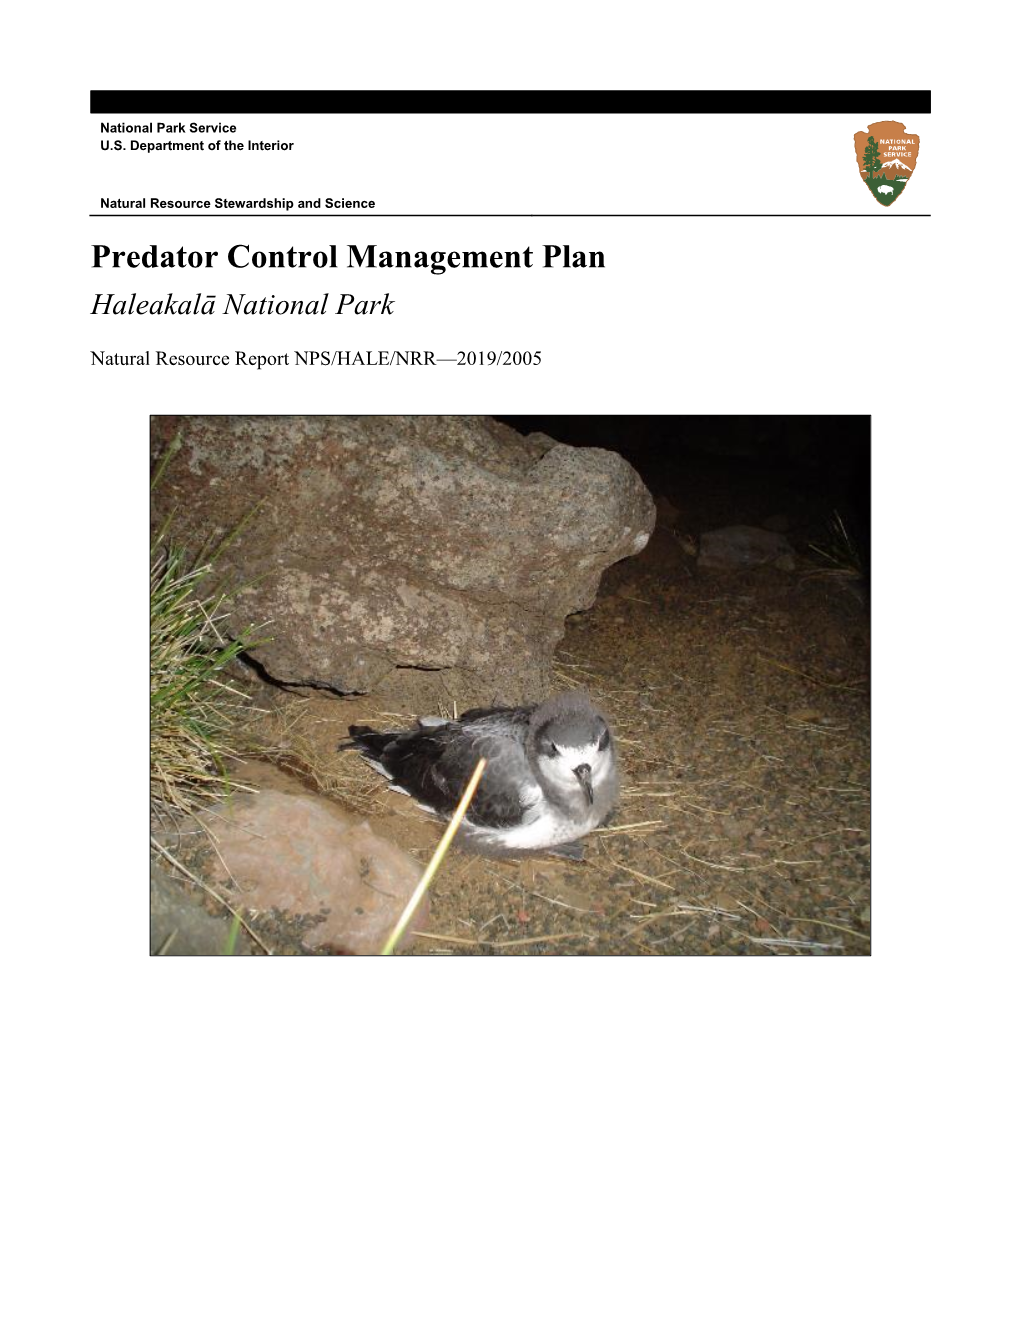 Predator Control Management Plan Haleakalā National Park